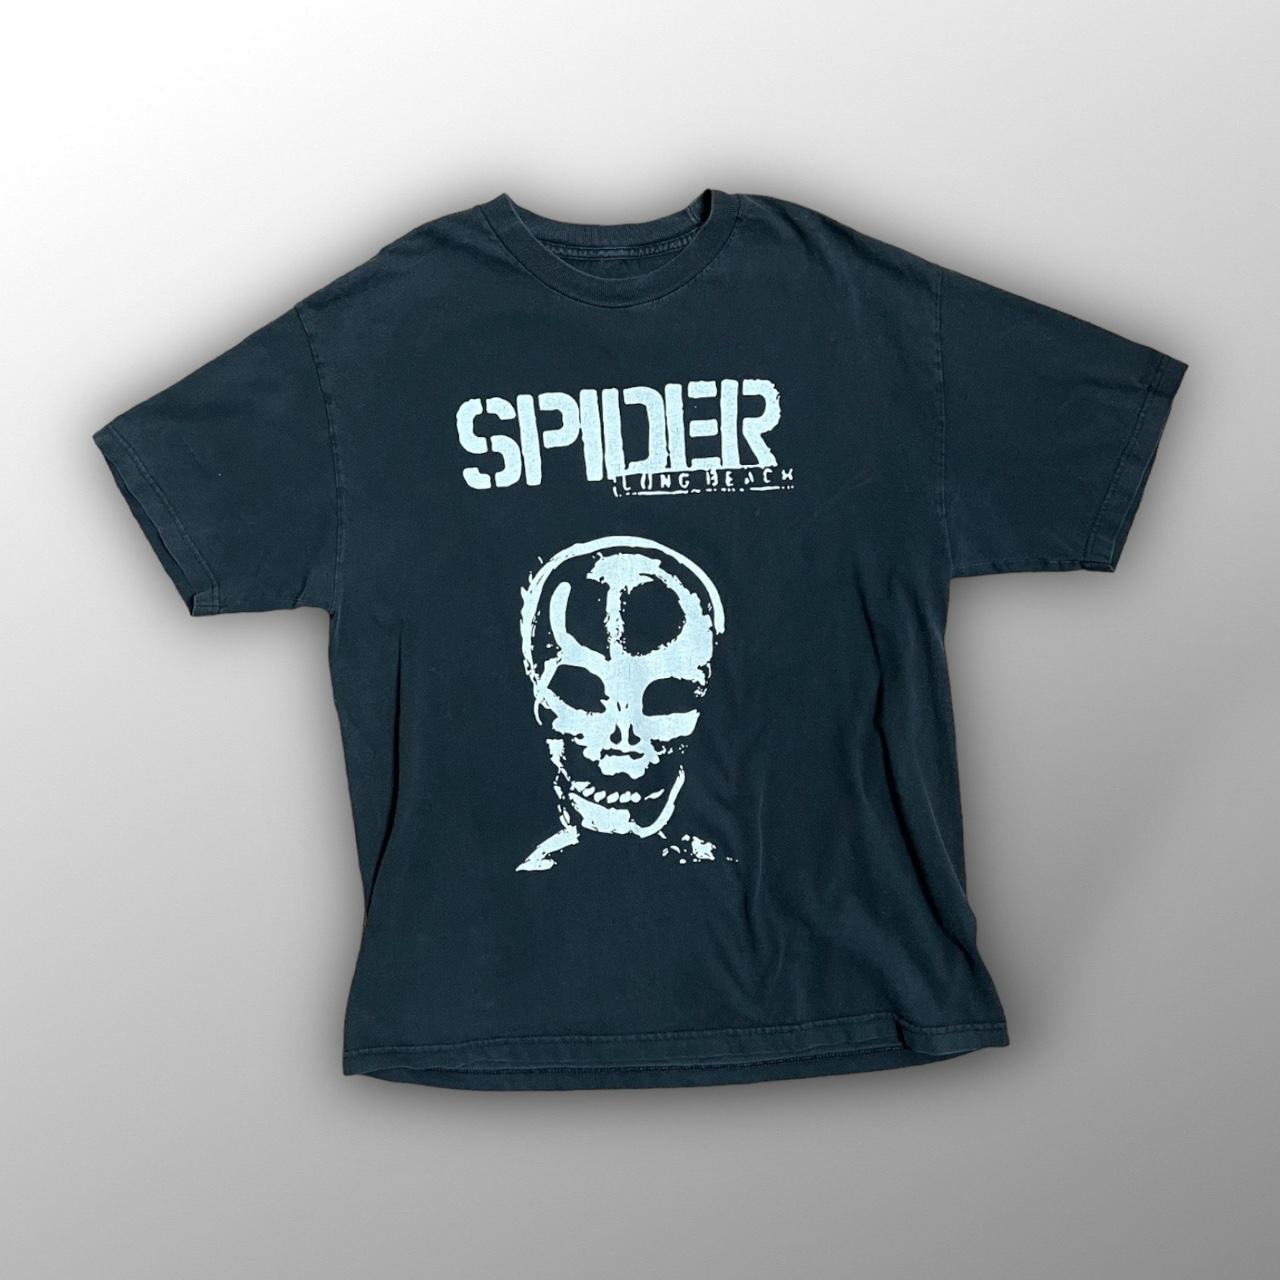 Spider Long Beach Skeleton Band T... - Depop